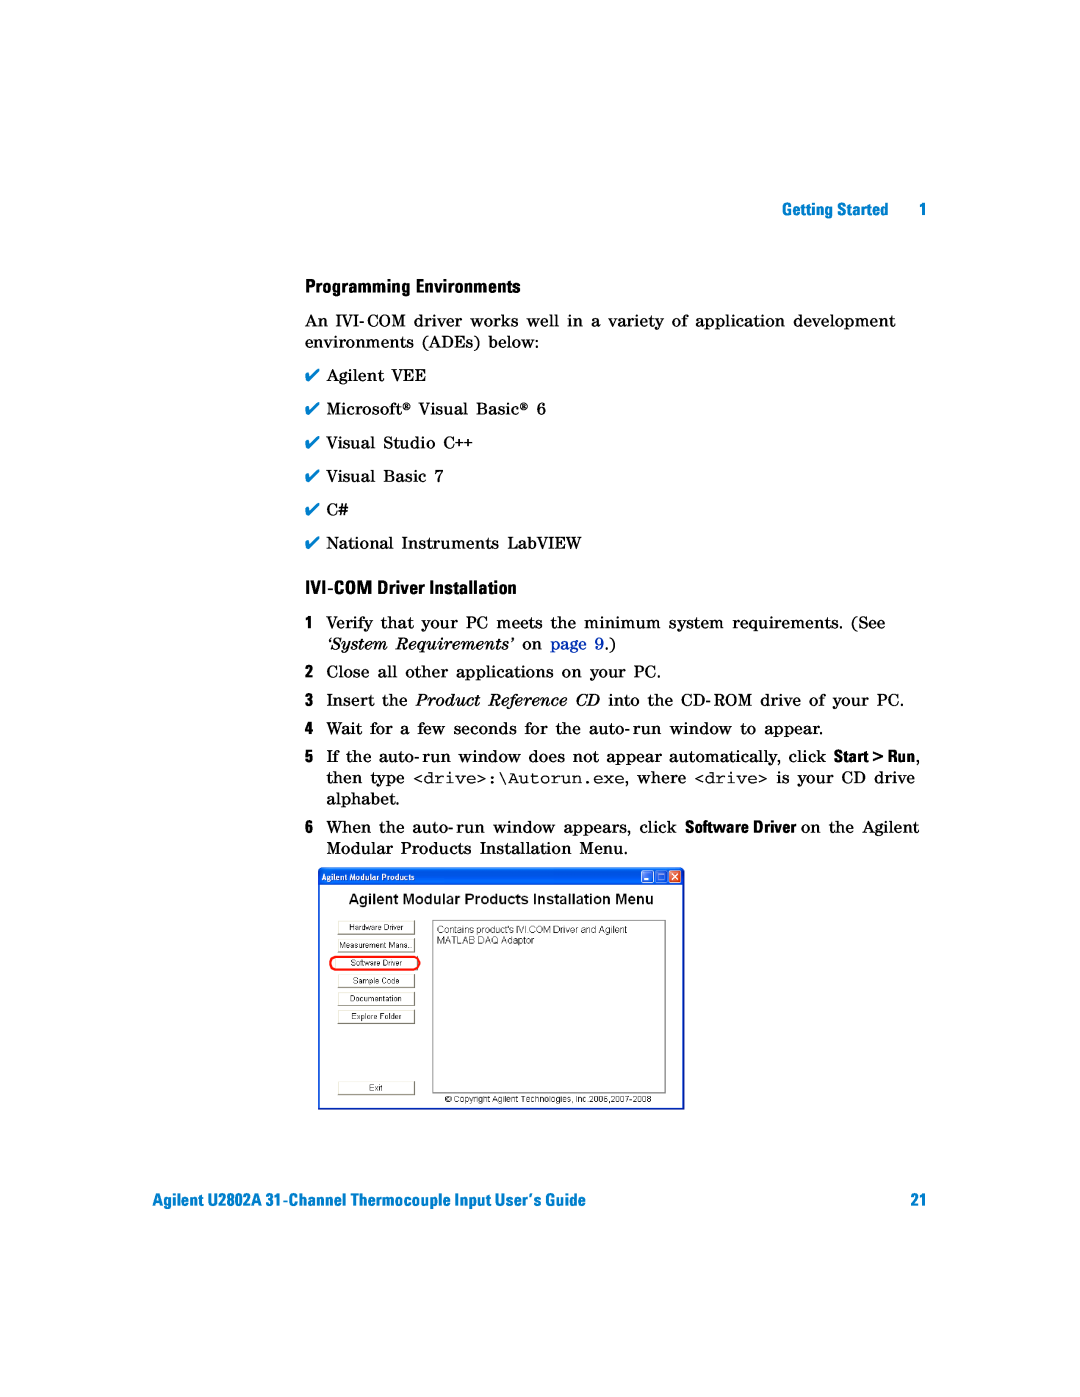 Agilent Technologies U2802A manual Programming Environments, IVI-COMDriver Installation 